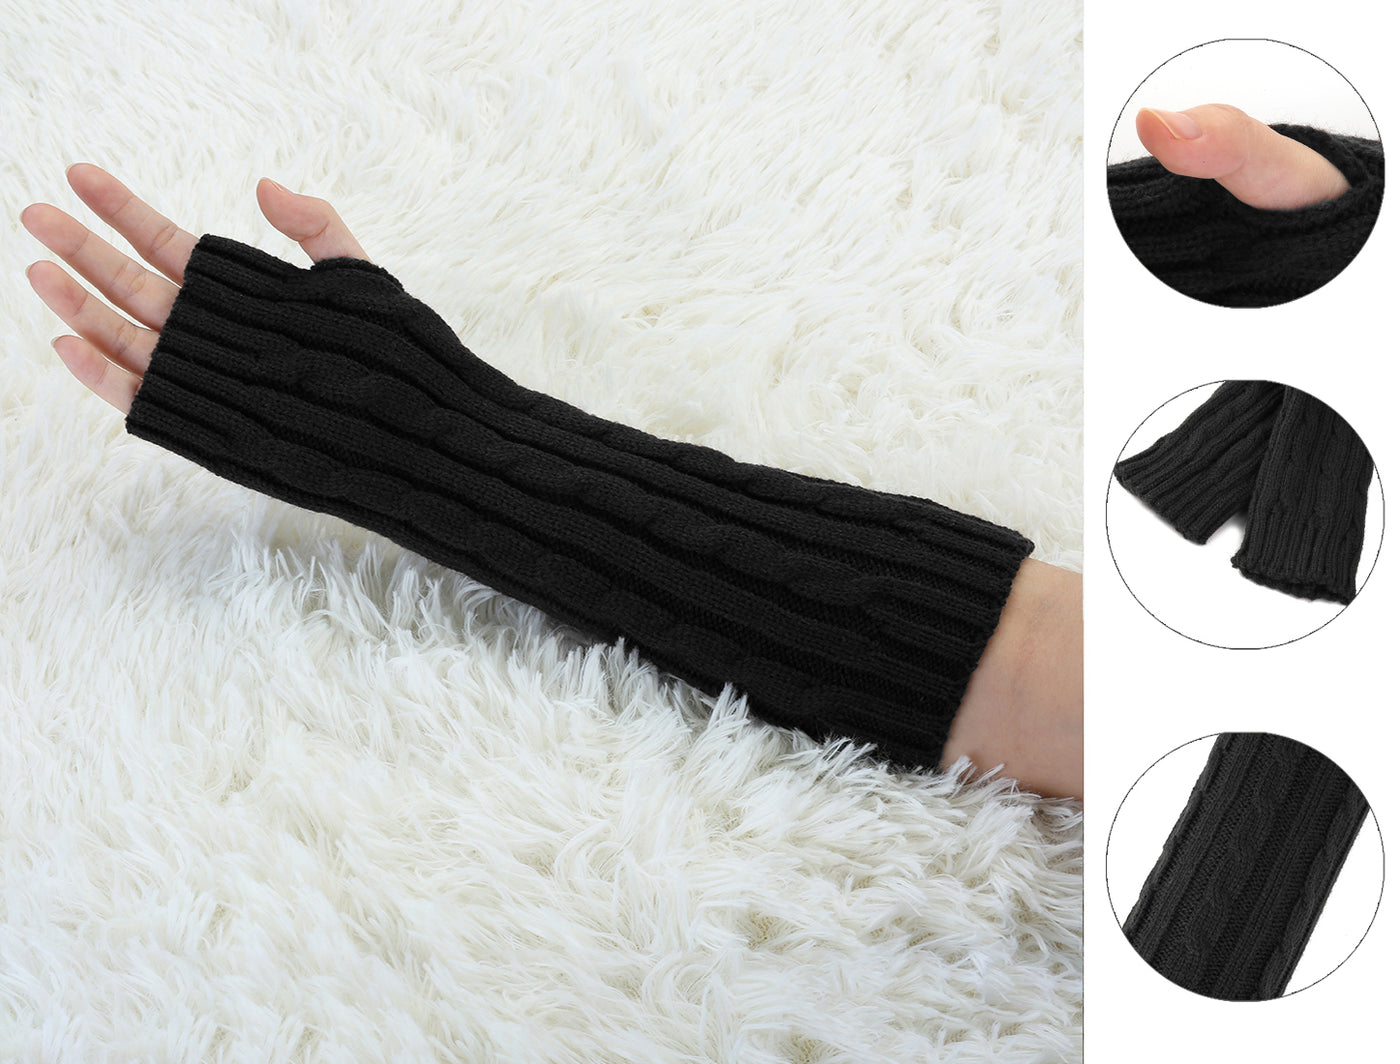 Allegra K Women's Fingerless Glove Winter Knit Thumb Elbow Length Arm Warmers